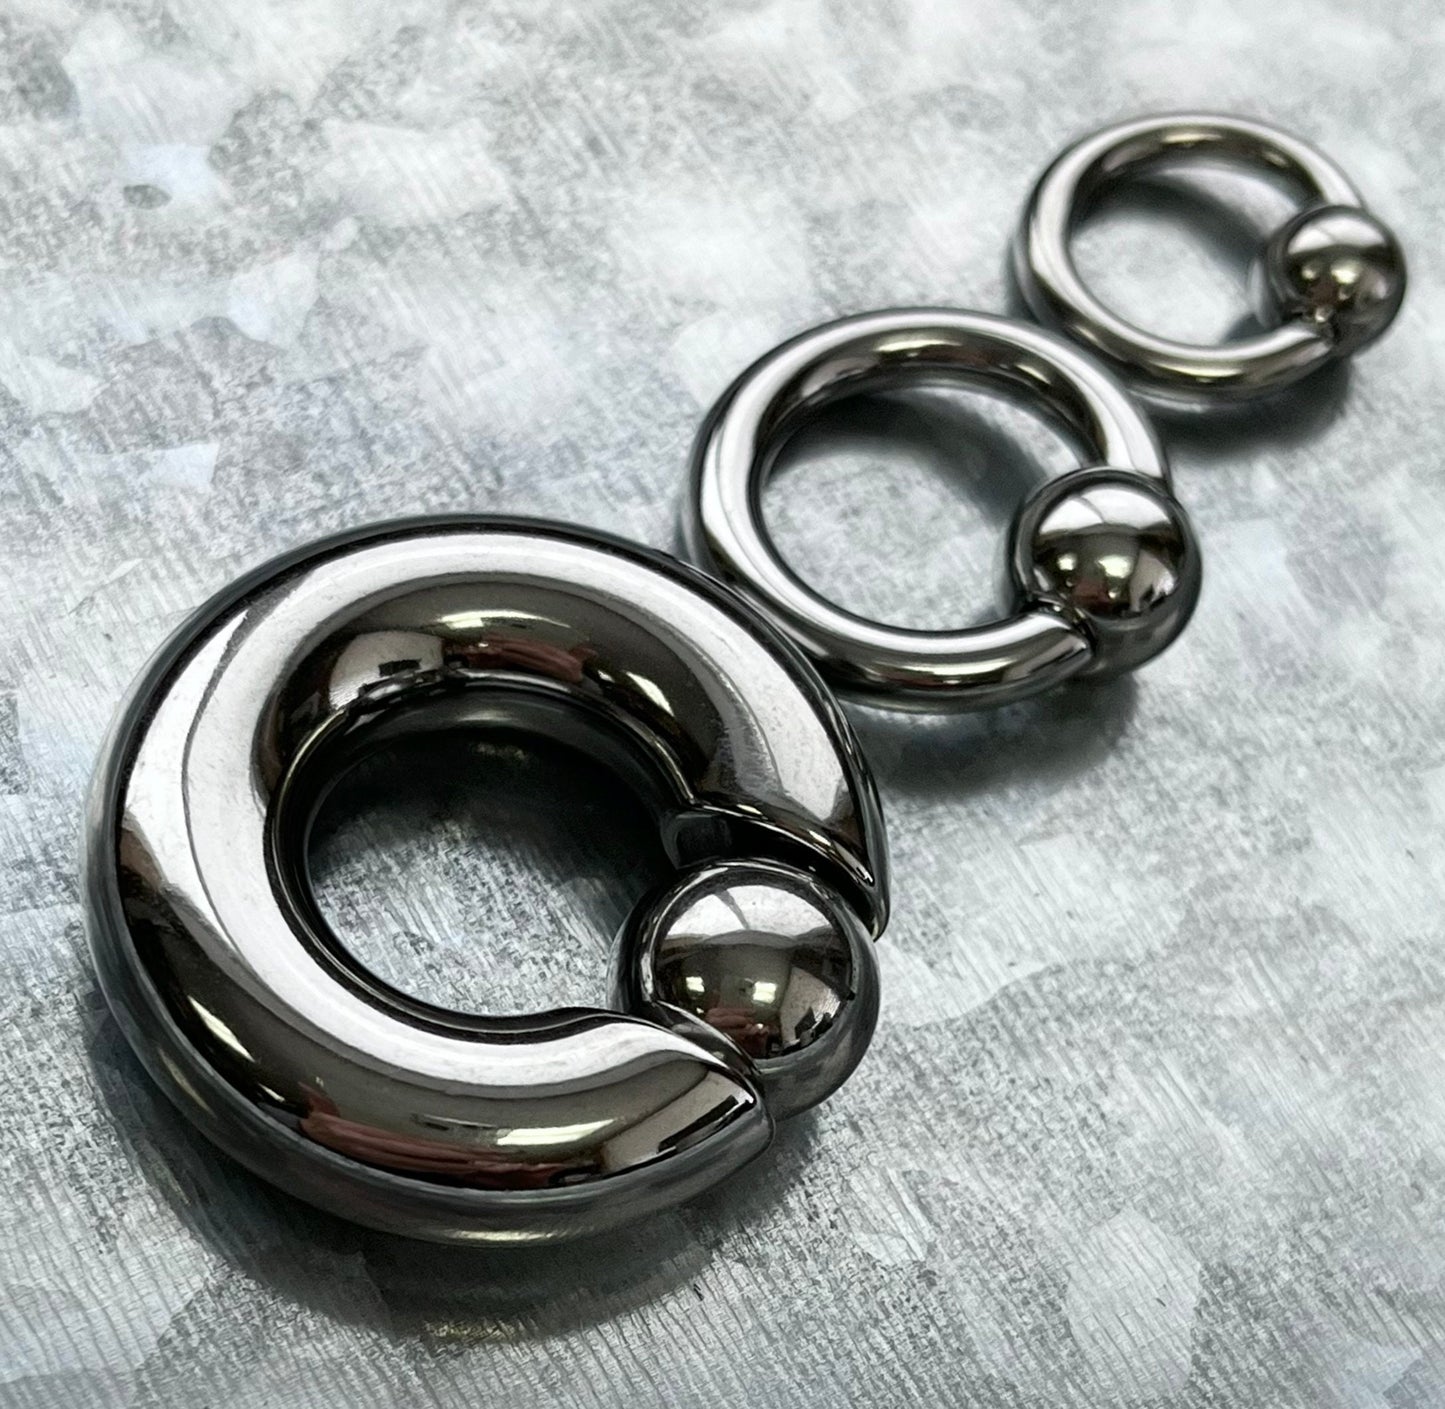 1 Piece Spring Loaded Captive Bead Large Gauge Steel Segment Ring/Hoop - Easy Pop Out - Gauges 8g (3.2mm) thru 00g (10mm) Available!